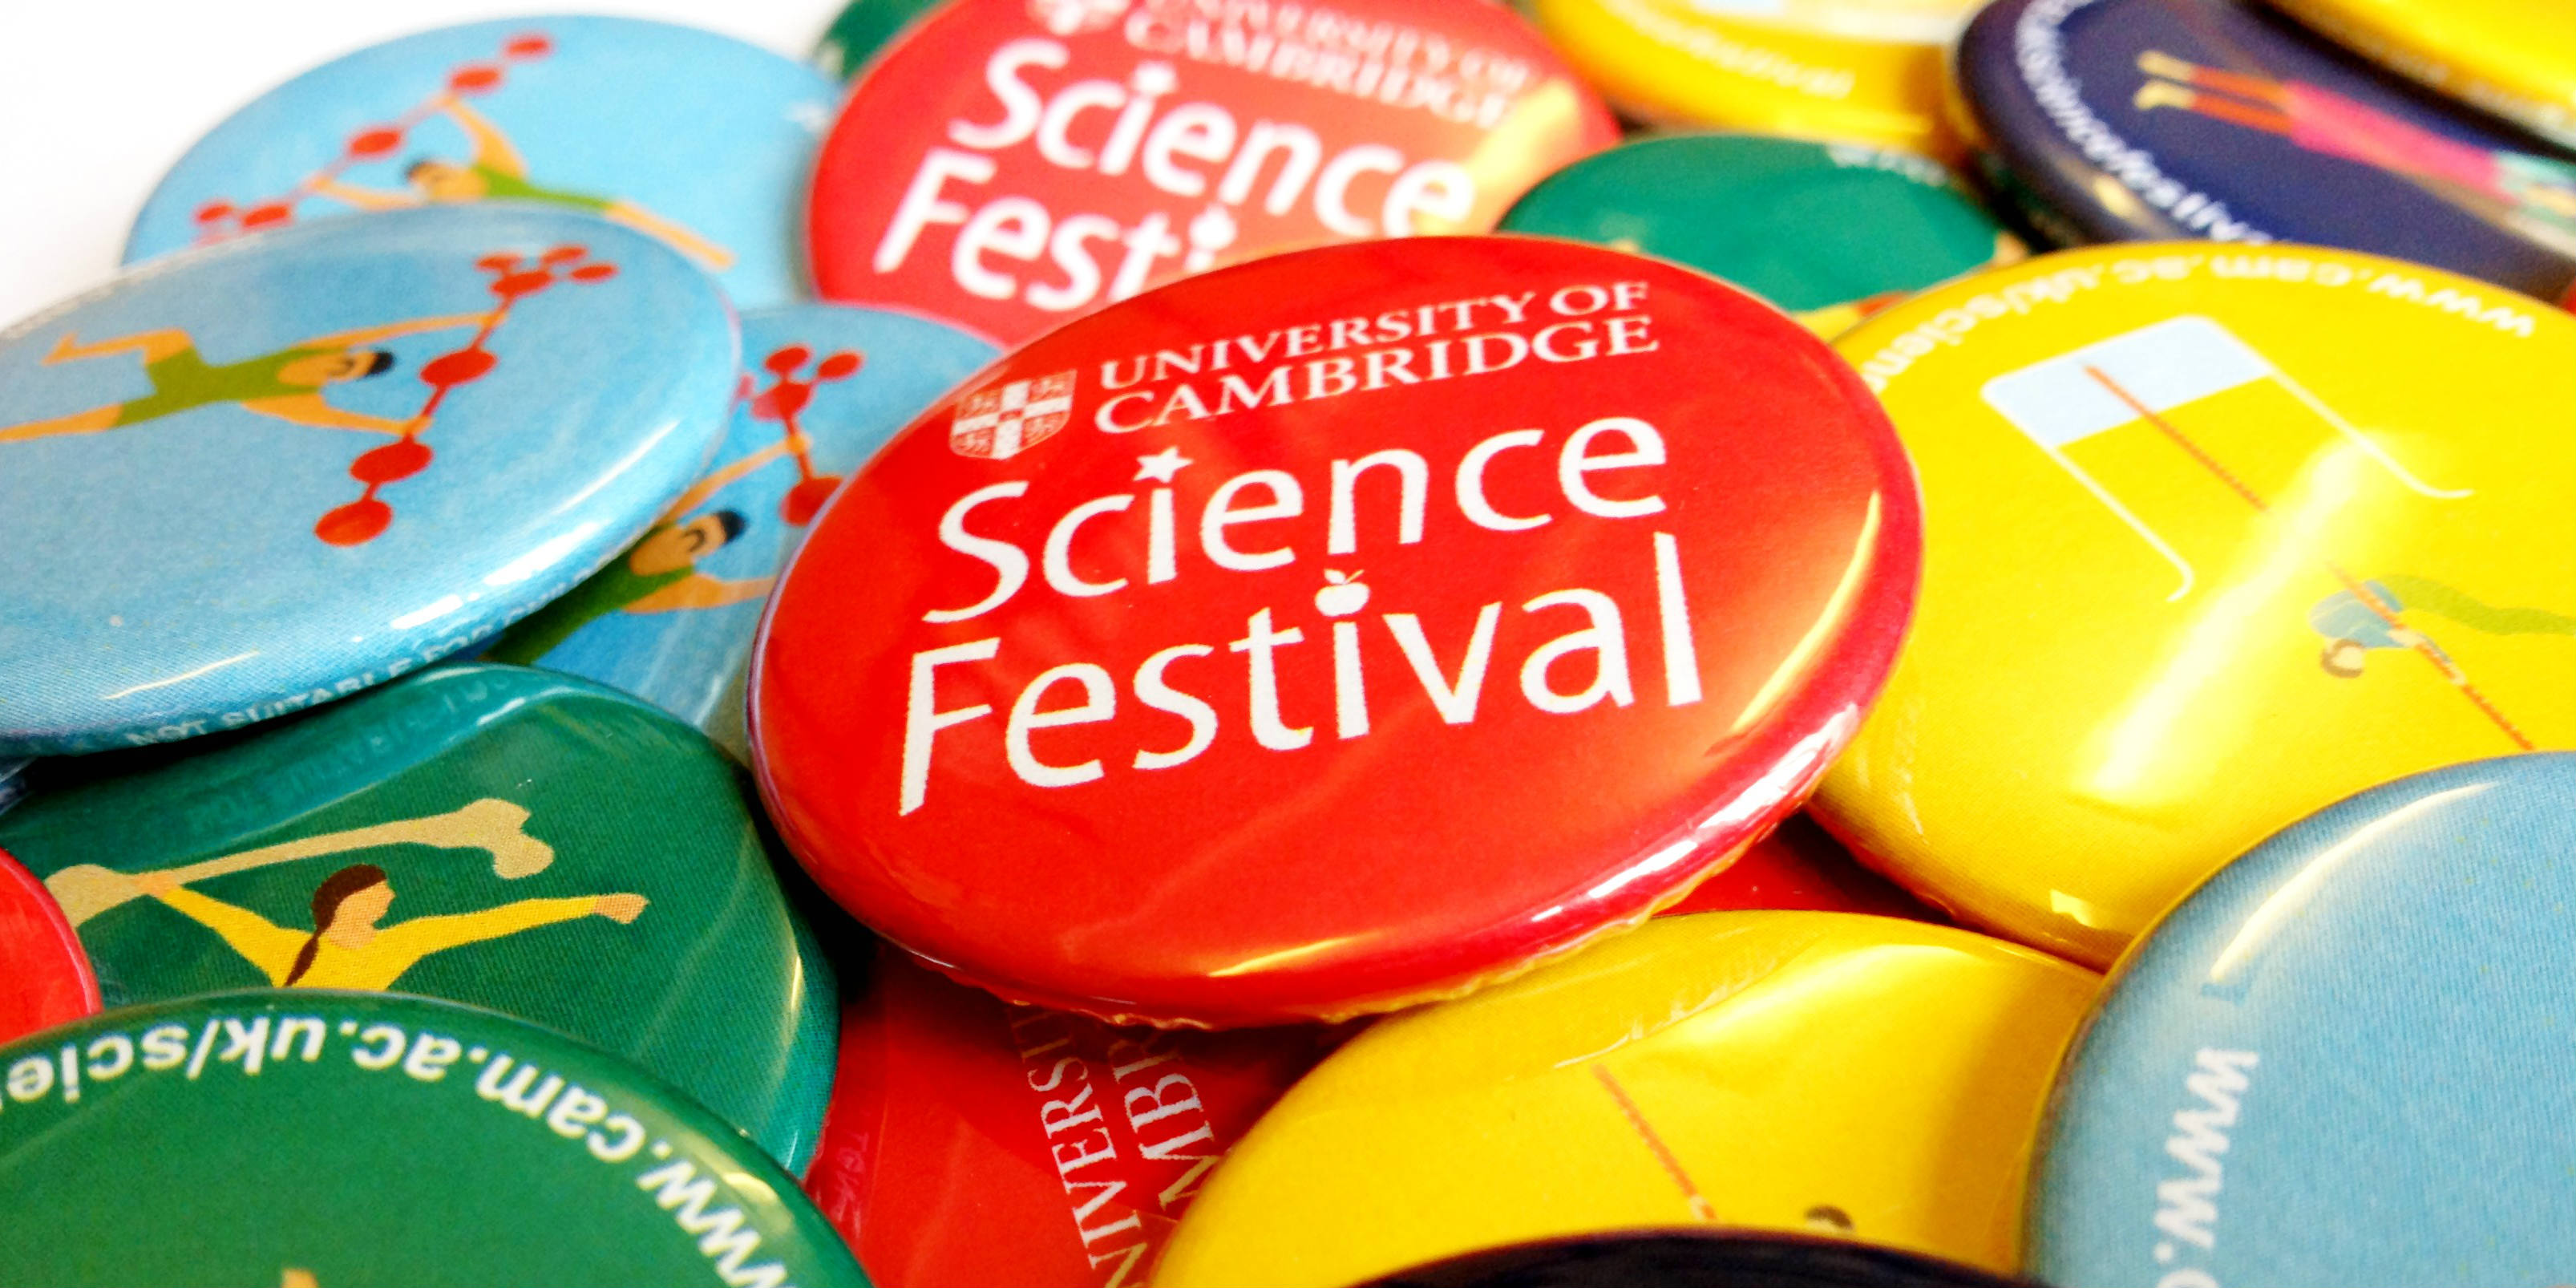 University of Cambridge photo archive: Science Festival 2014